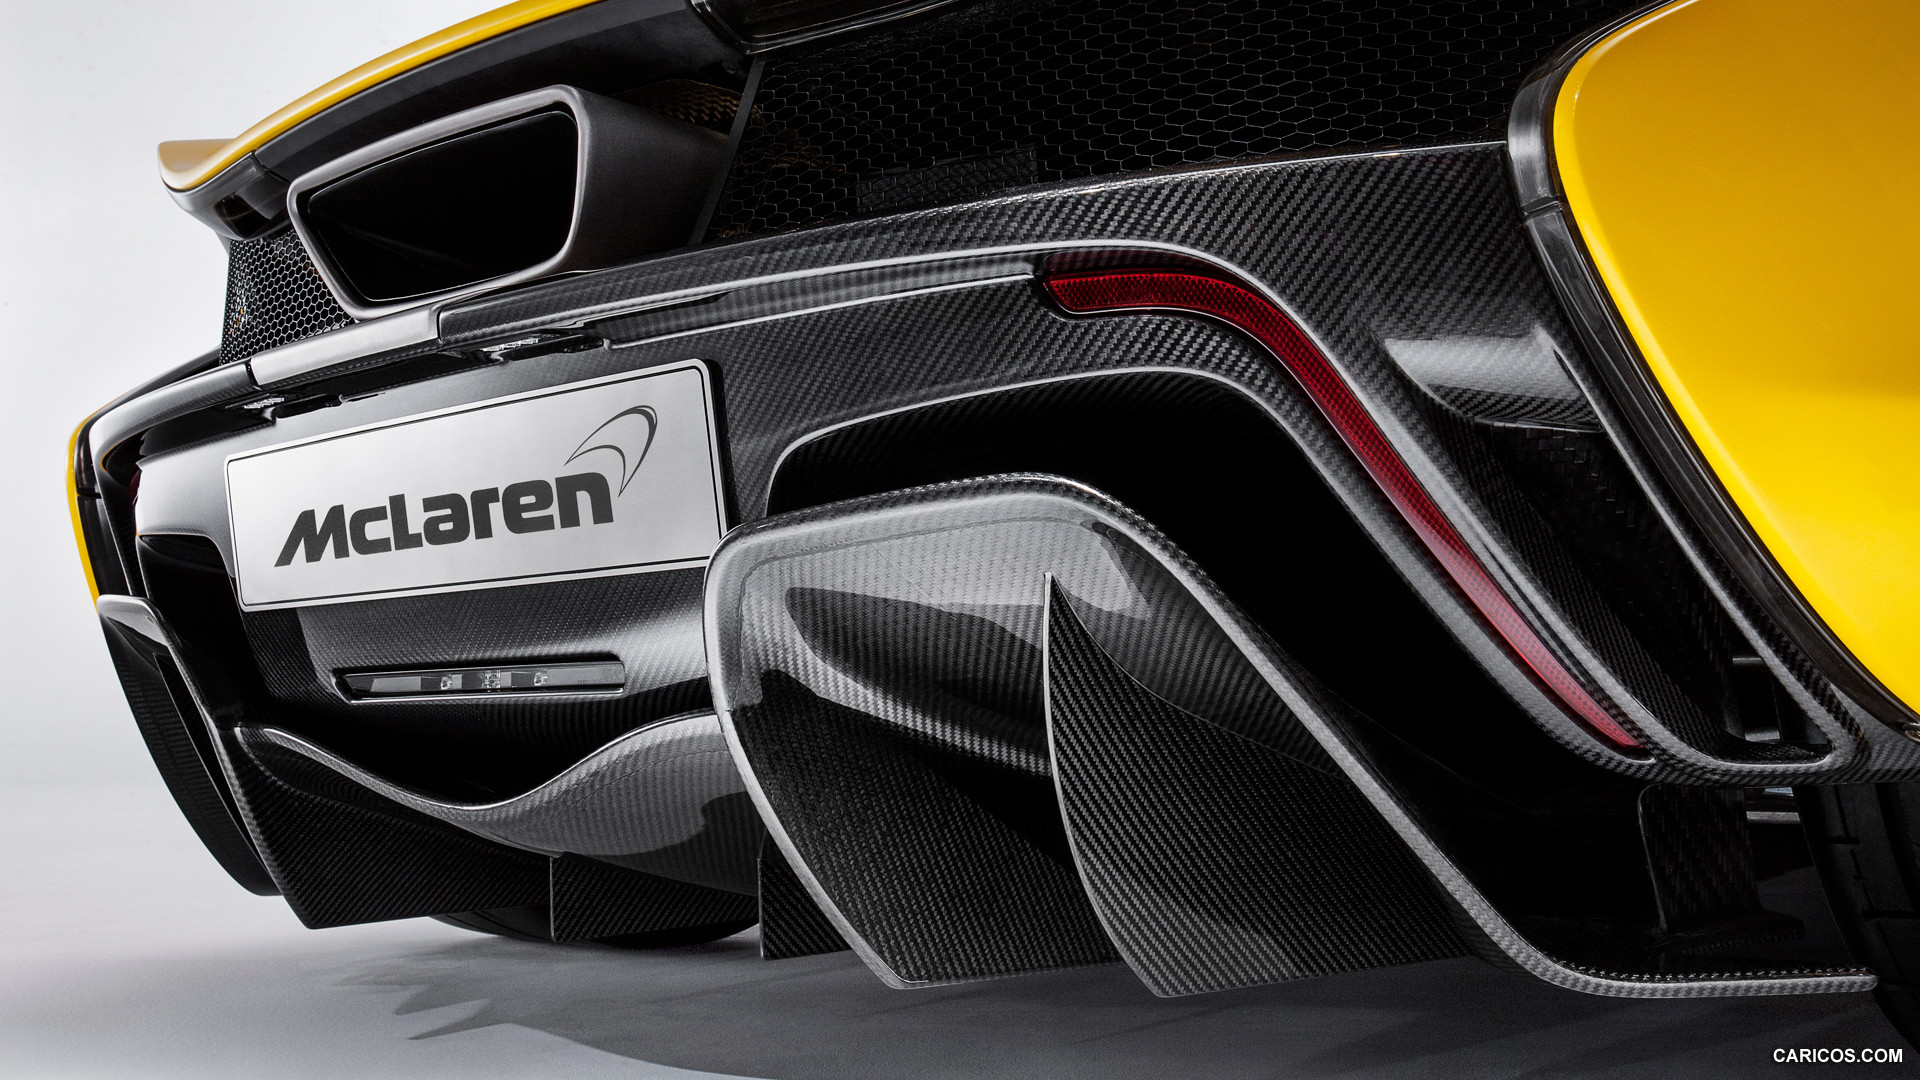 2014 McLaren P1 Diffuser - Rear, #61 of 126